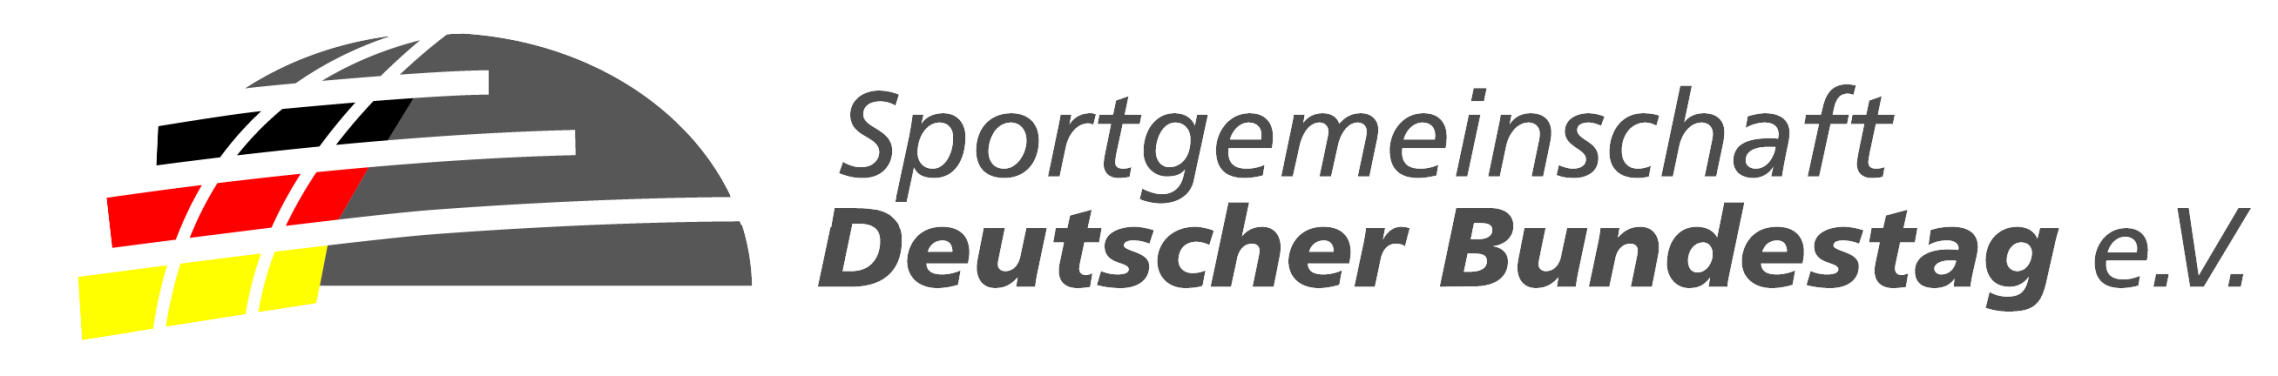 Sportgemeinschaft Deutscher Bundestag e.V.